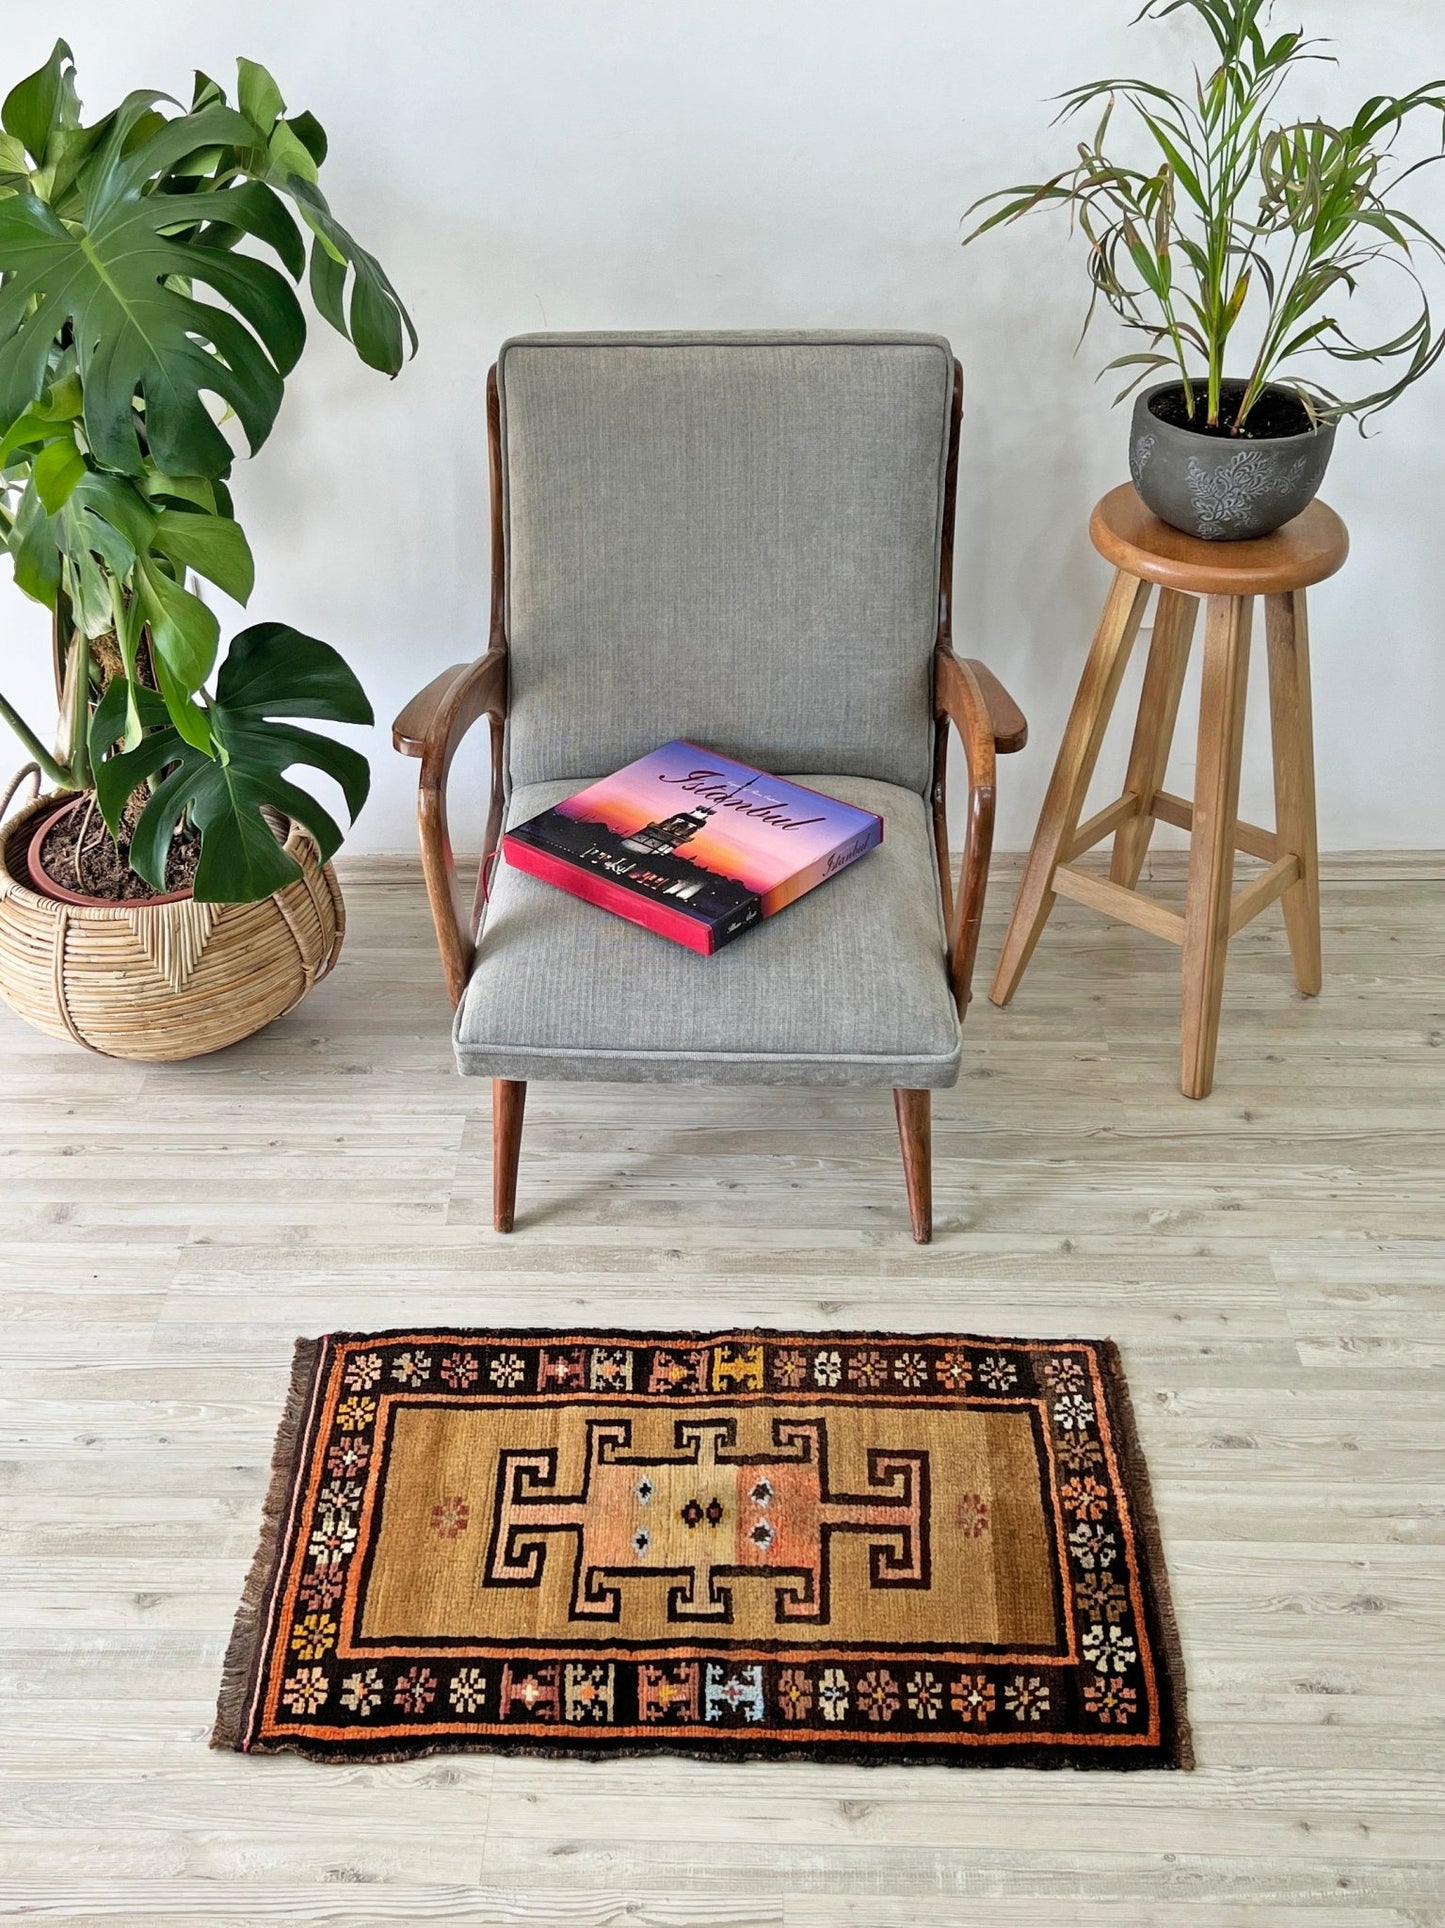 wool vintage rug for bathroom door mat turkish mini rug shop san francisco bay area palo alto berkeley buy vintage rug online